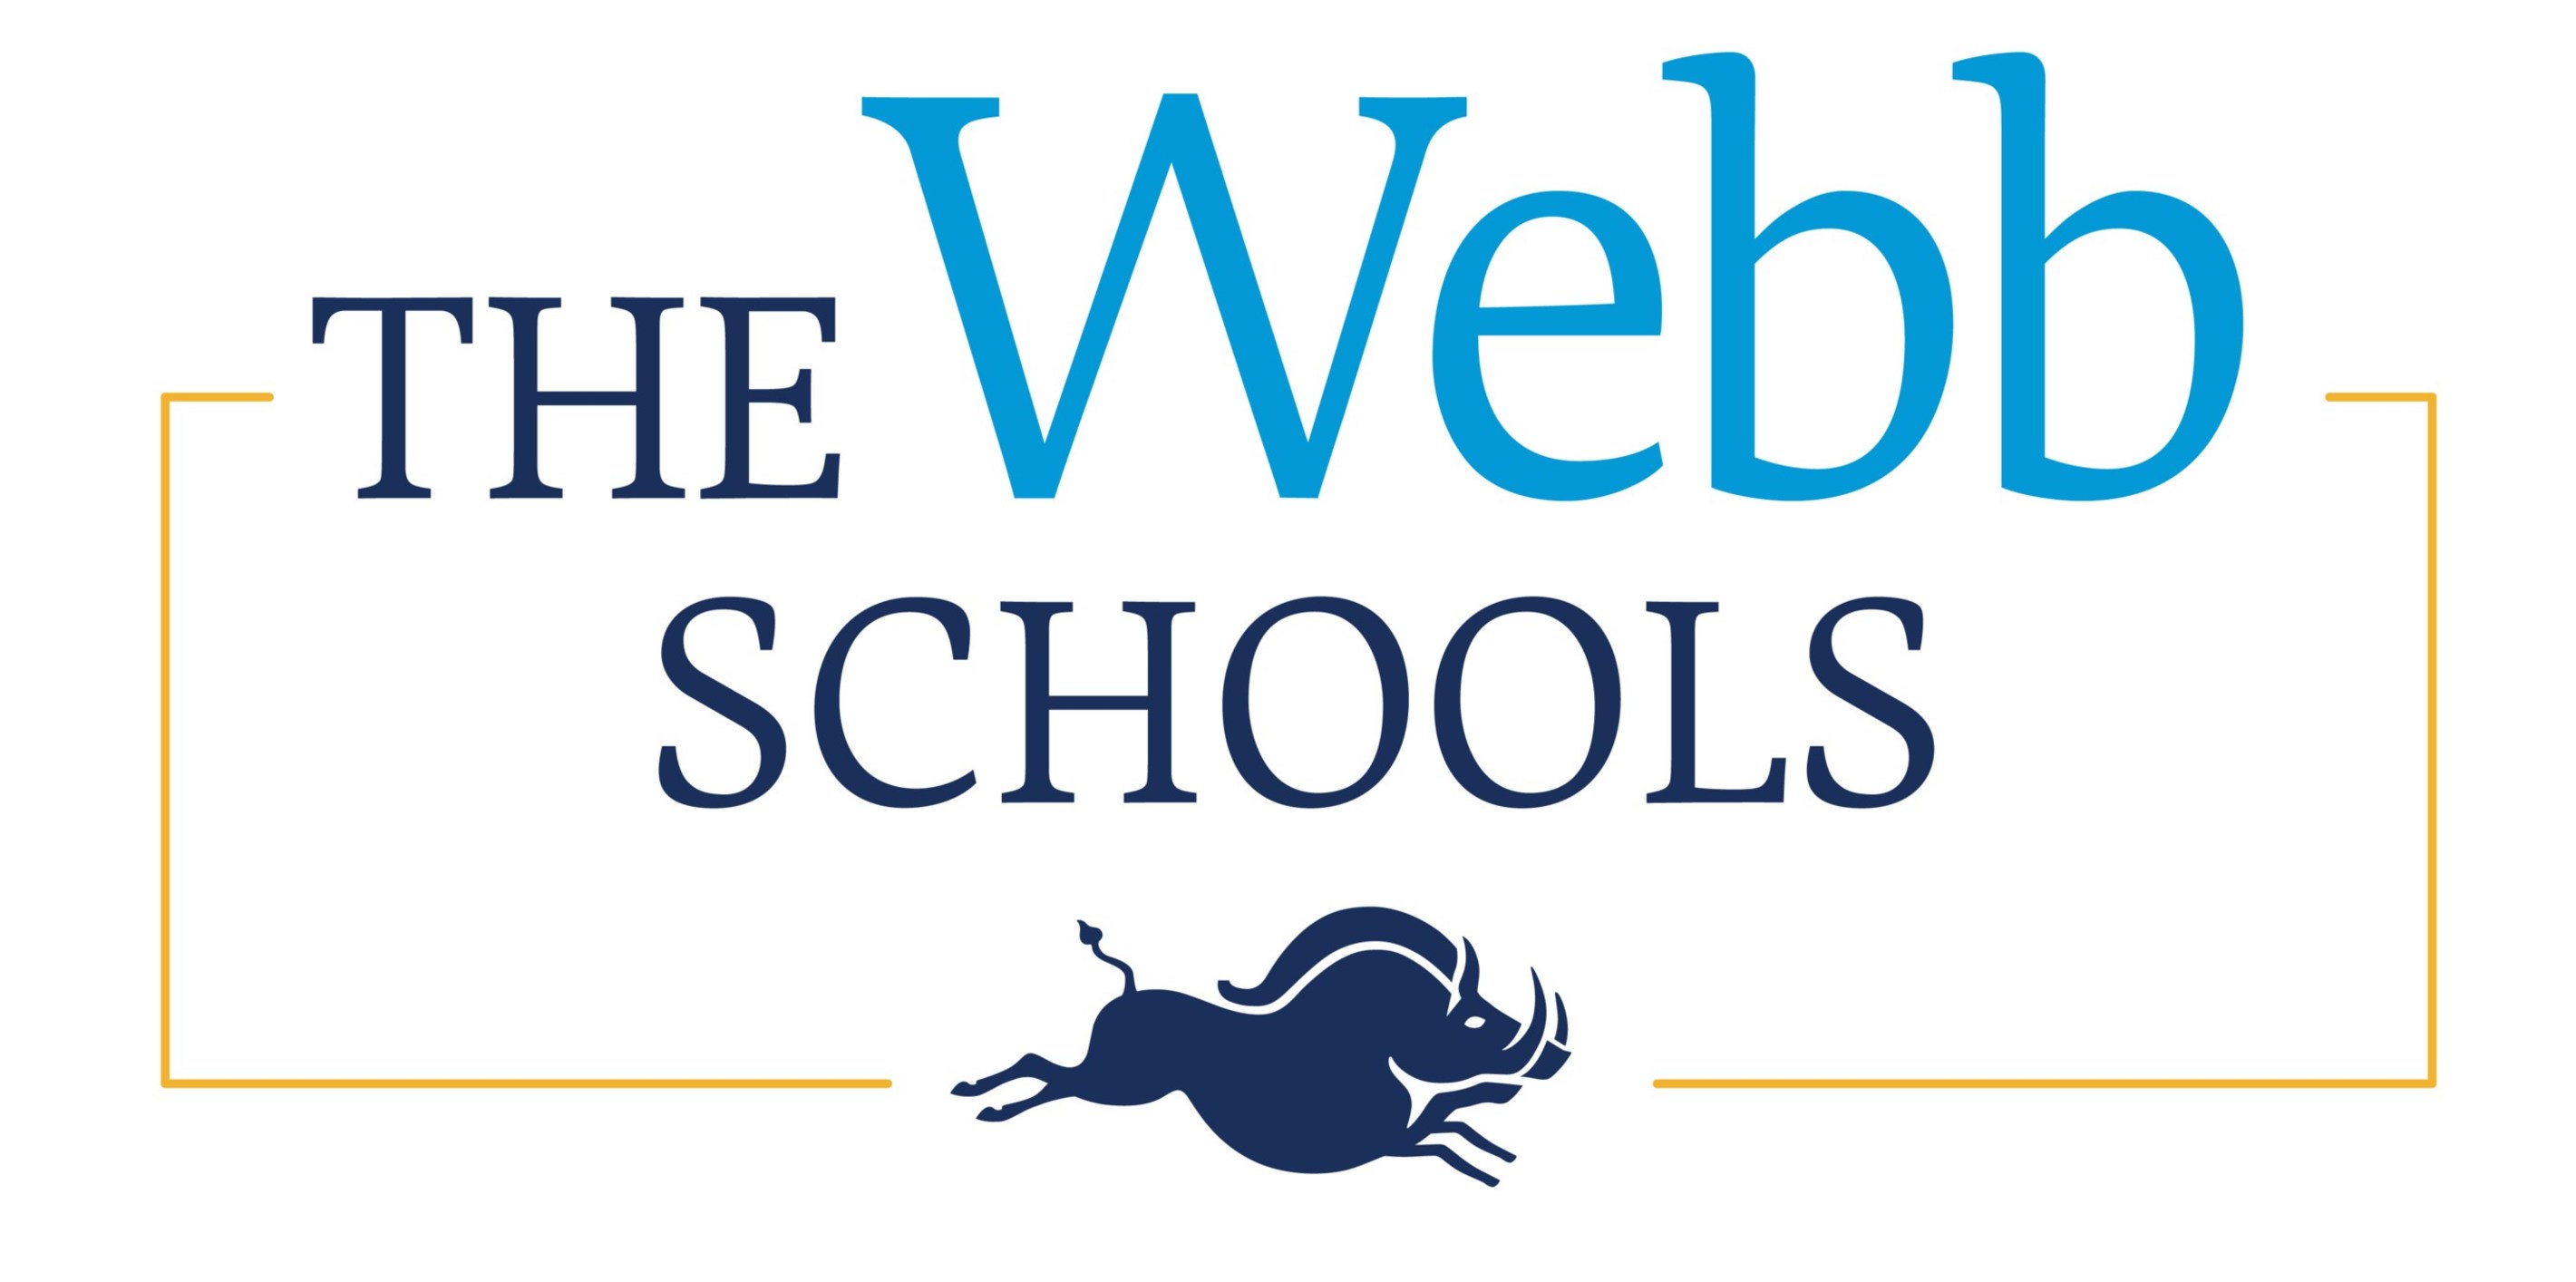 The Webb Schools to Receive 100 Million